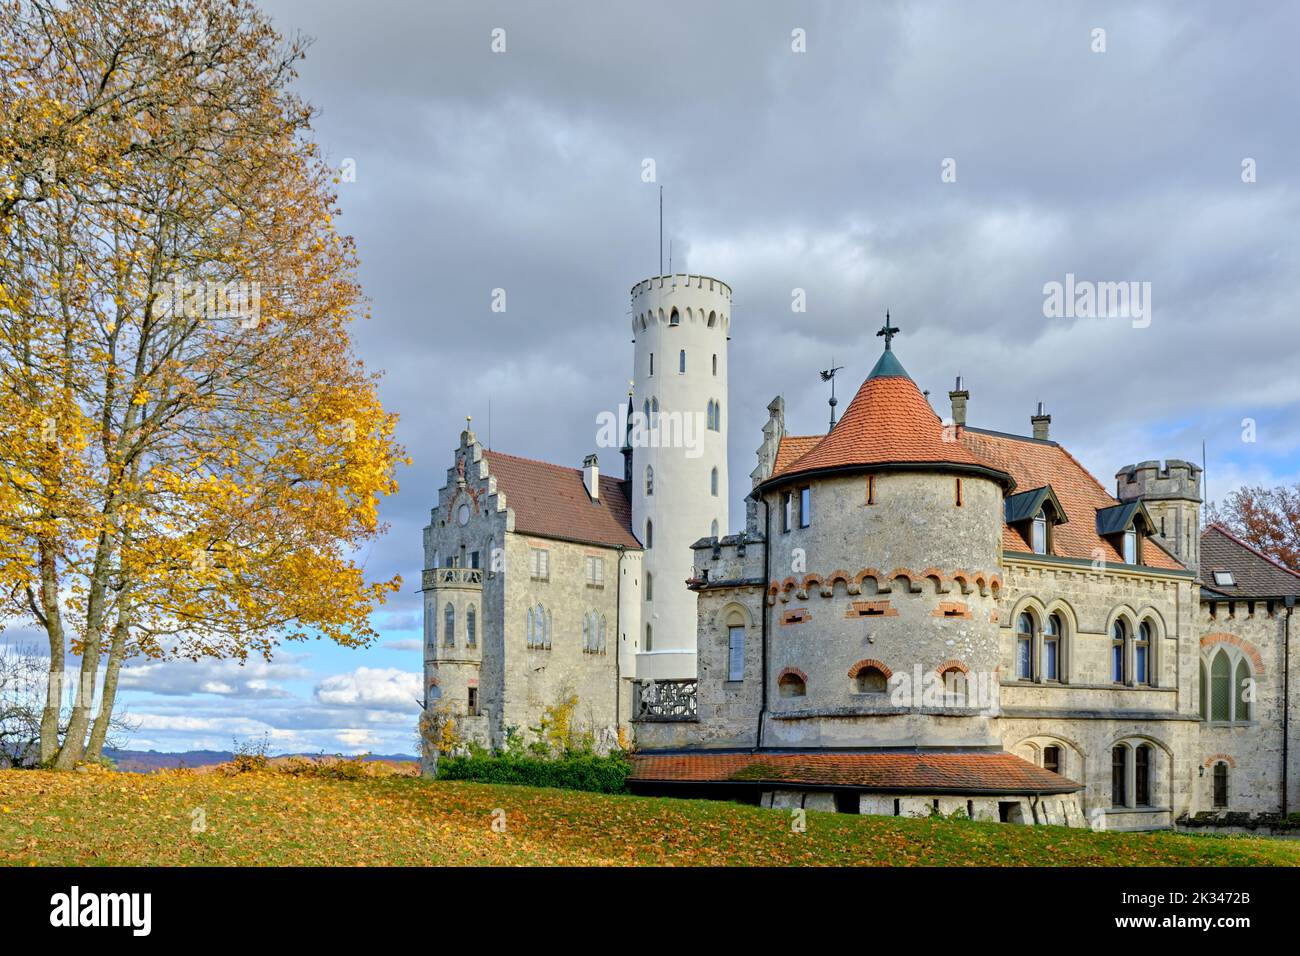 Lichtenstein Castle, a Historicist edifice in neo-Gothic style, overlooking the settlement of Honau, Swabian Jura, Baden-Württemberg, Germany, Europe. Stock Photo